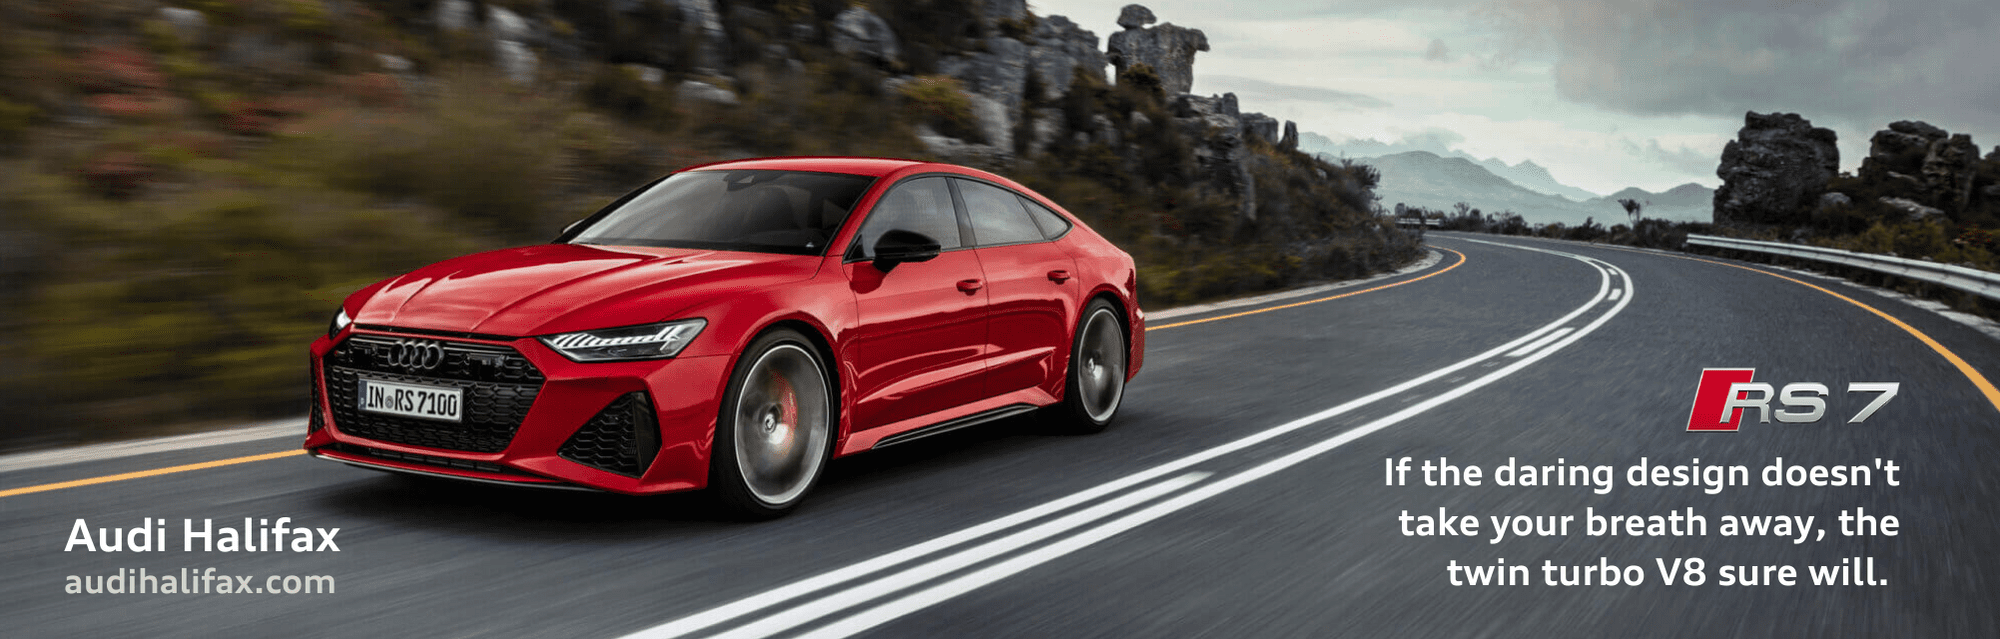 Audi Halifax - Spotlight on Business Magazine